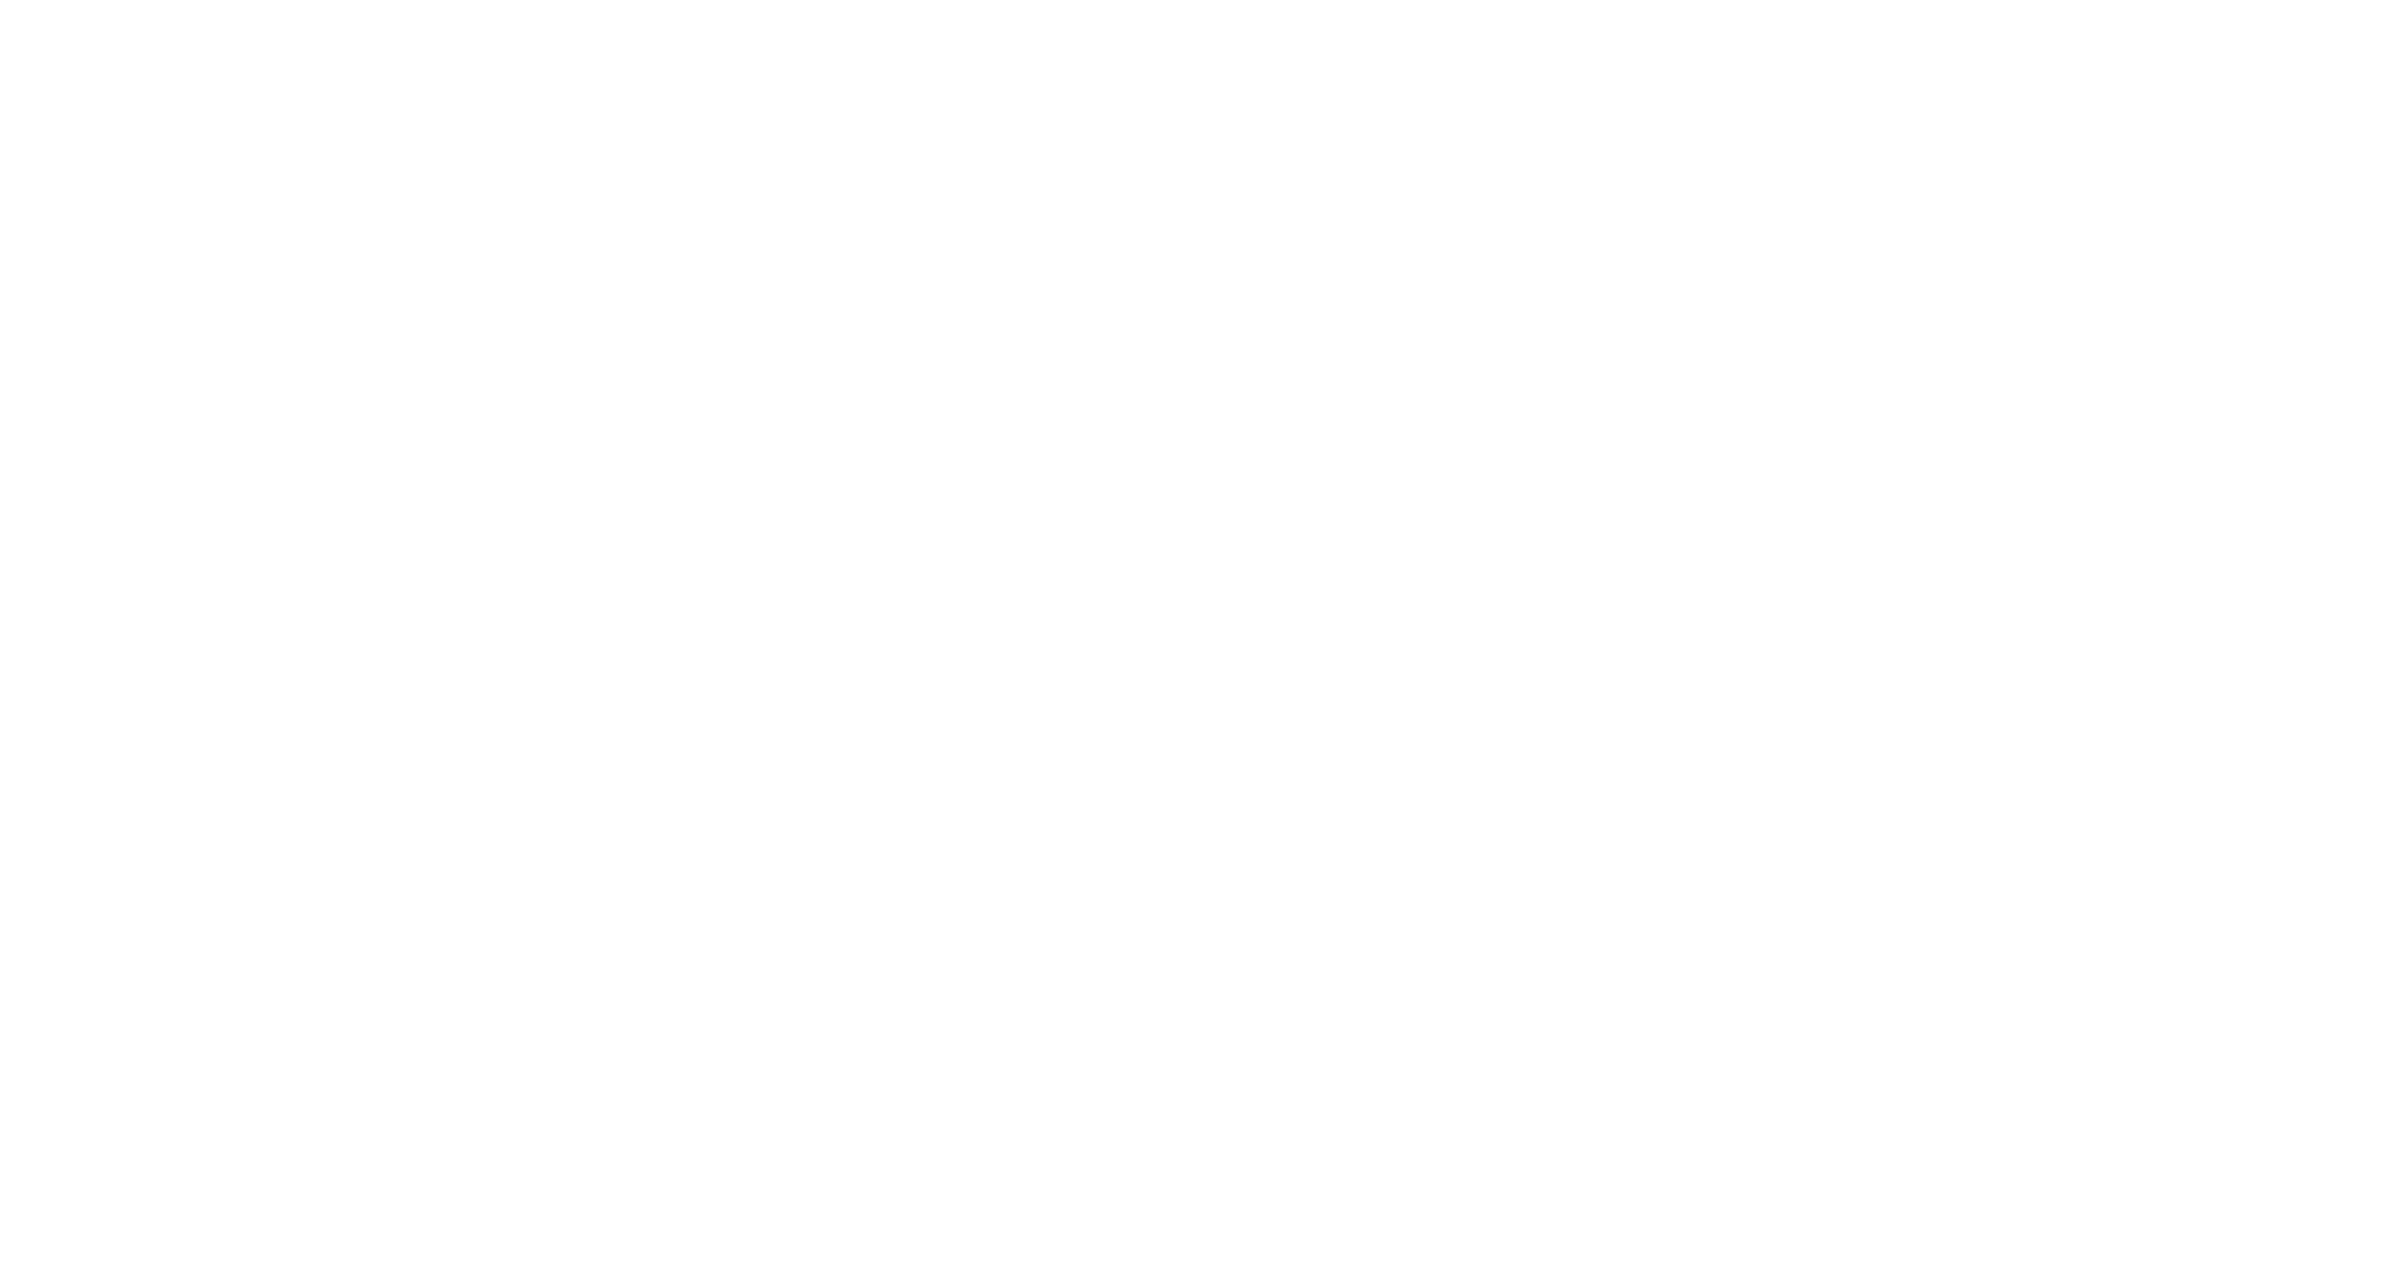 Blu-ray Disc Logo - Blu ray Disc Logo PNG Transparent & SVG Vector - Freebie Supply